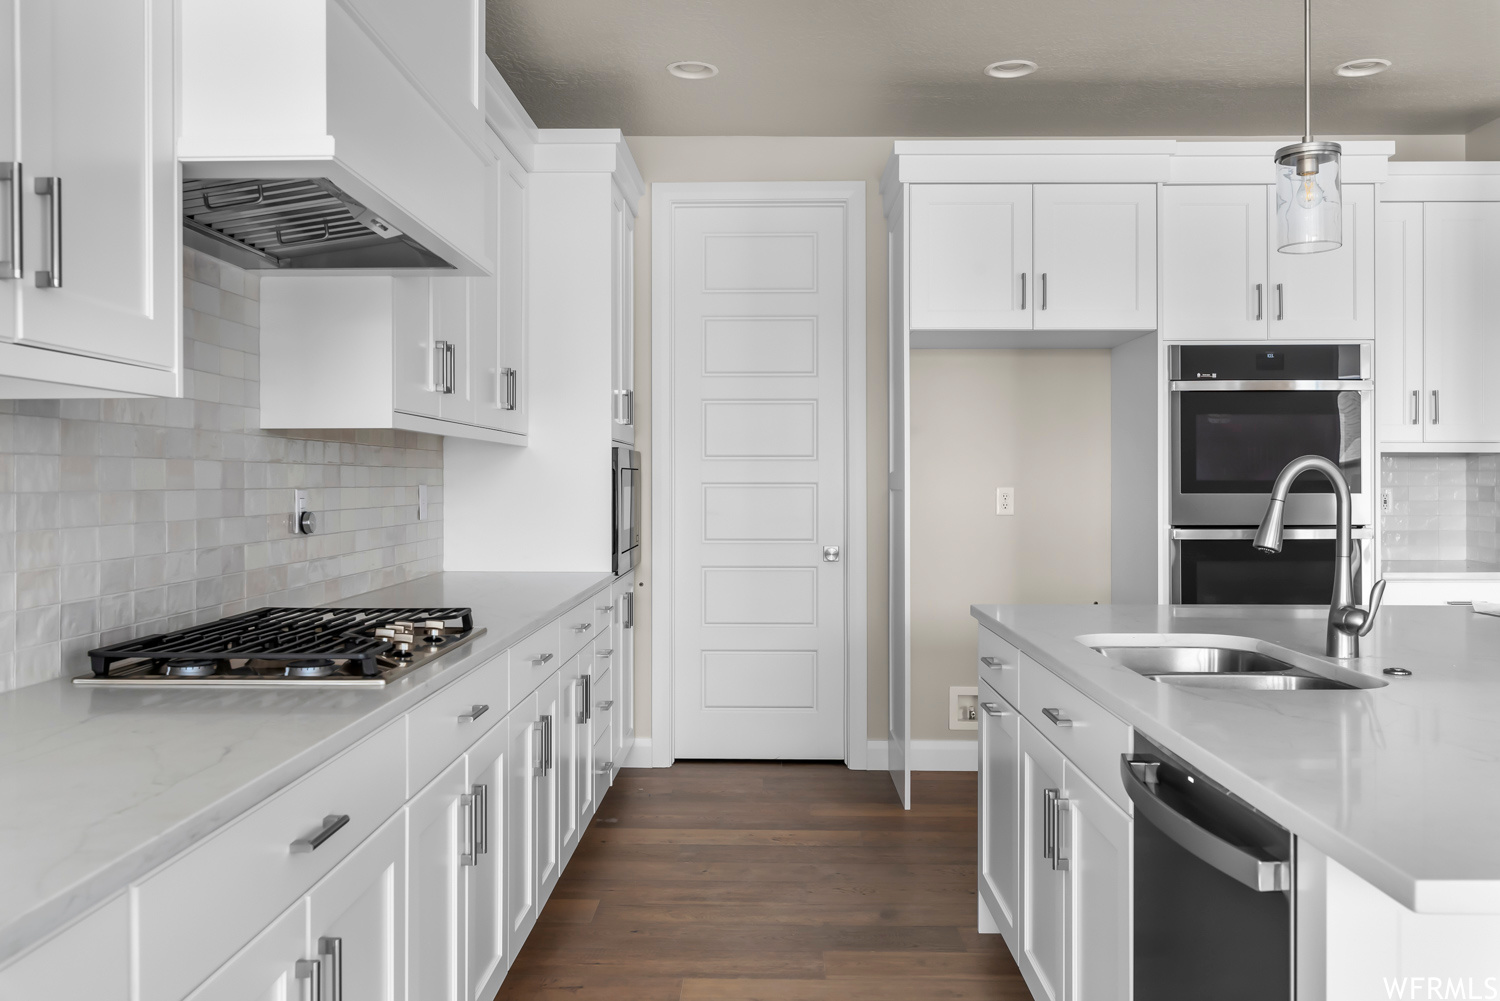 Kitchen featuring dark wood-type flooring, custom exhaust hood, stainless steel appliances, decorative light fixtures, and backsplash